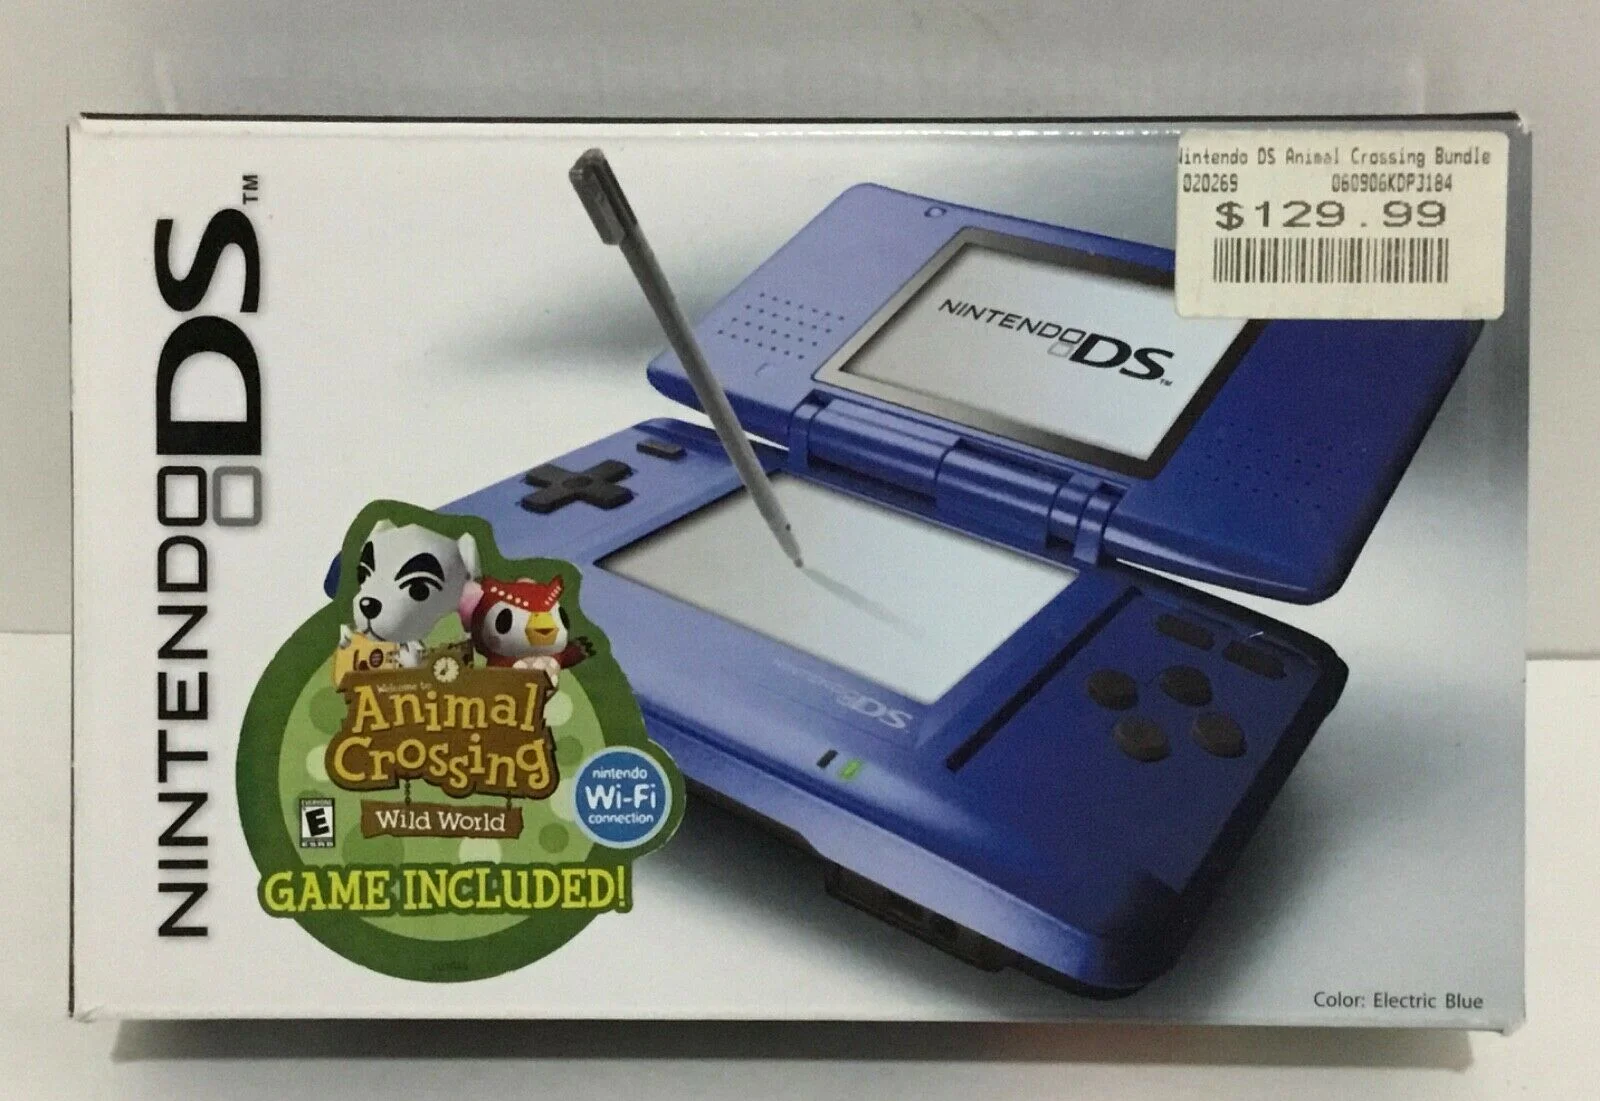  Nintendo DS Blue Animal Crossing Wild World Bundle